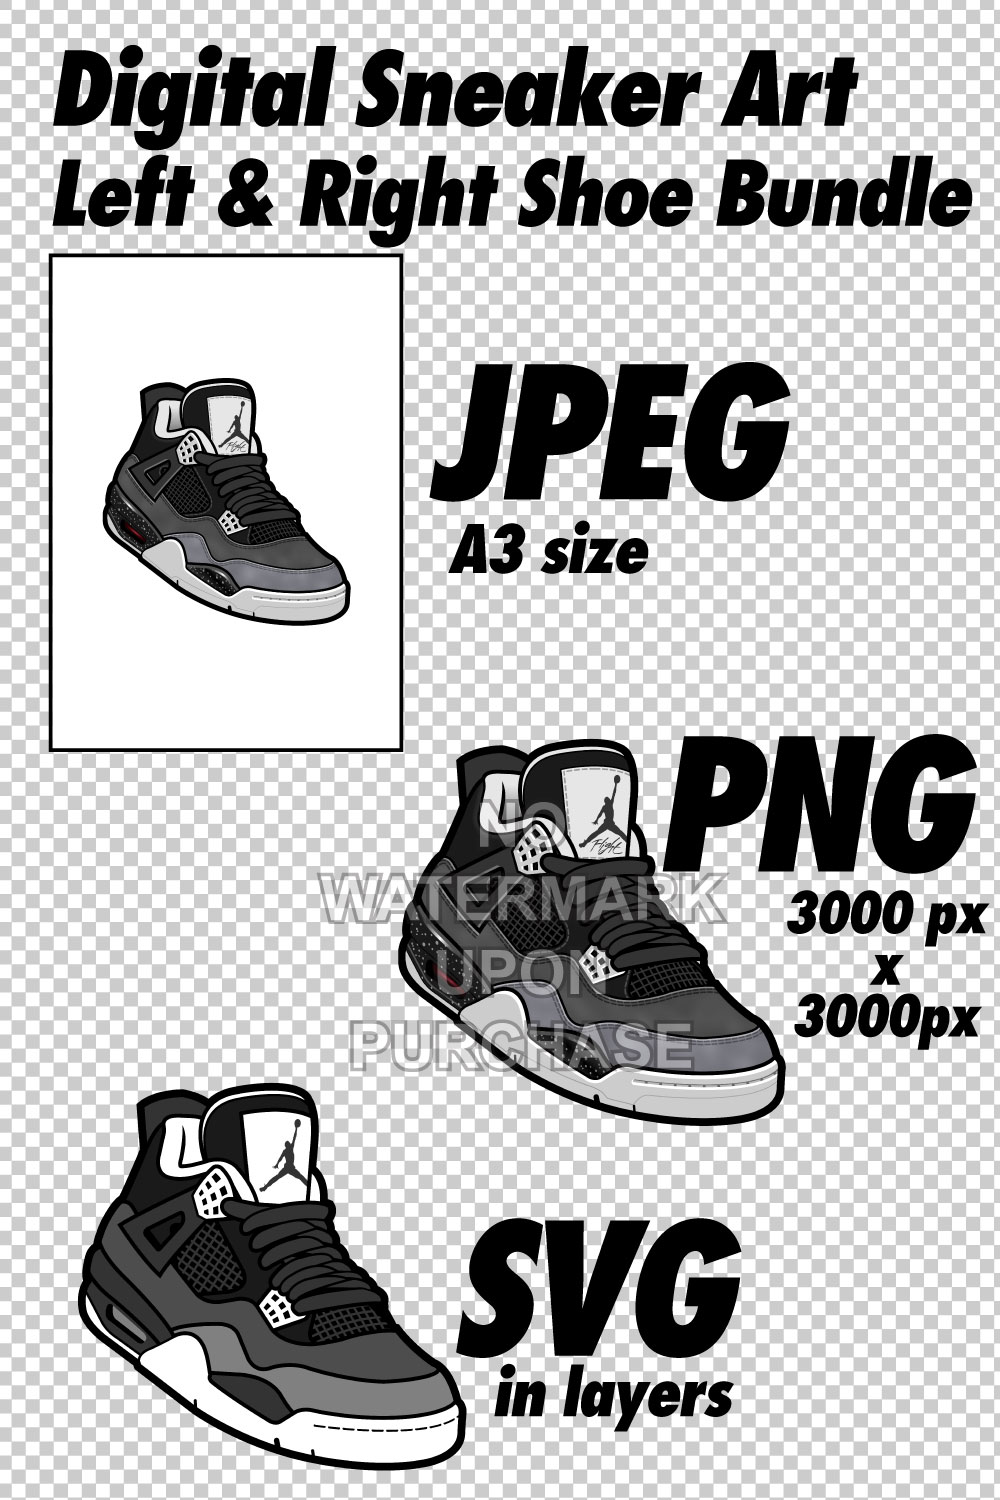 Air Jordan 4 Fear JPEG PNG SVG Sneaker Art right & left shoe bundle Digital Download pinterest preview image.